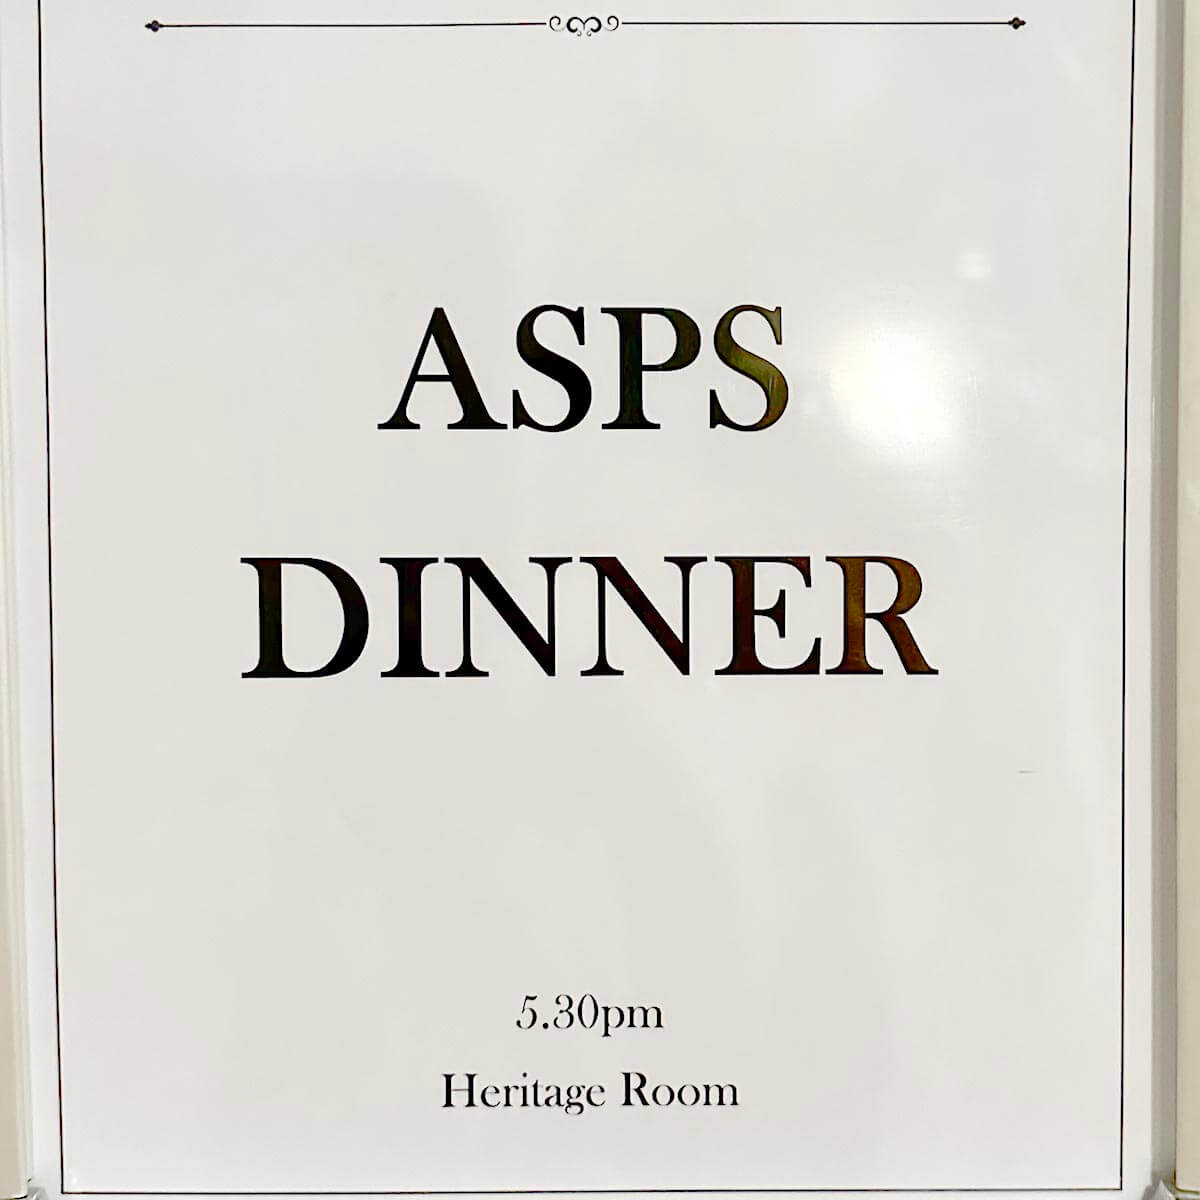 ASPS dinner sign 